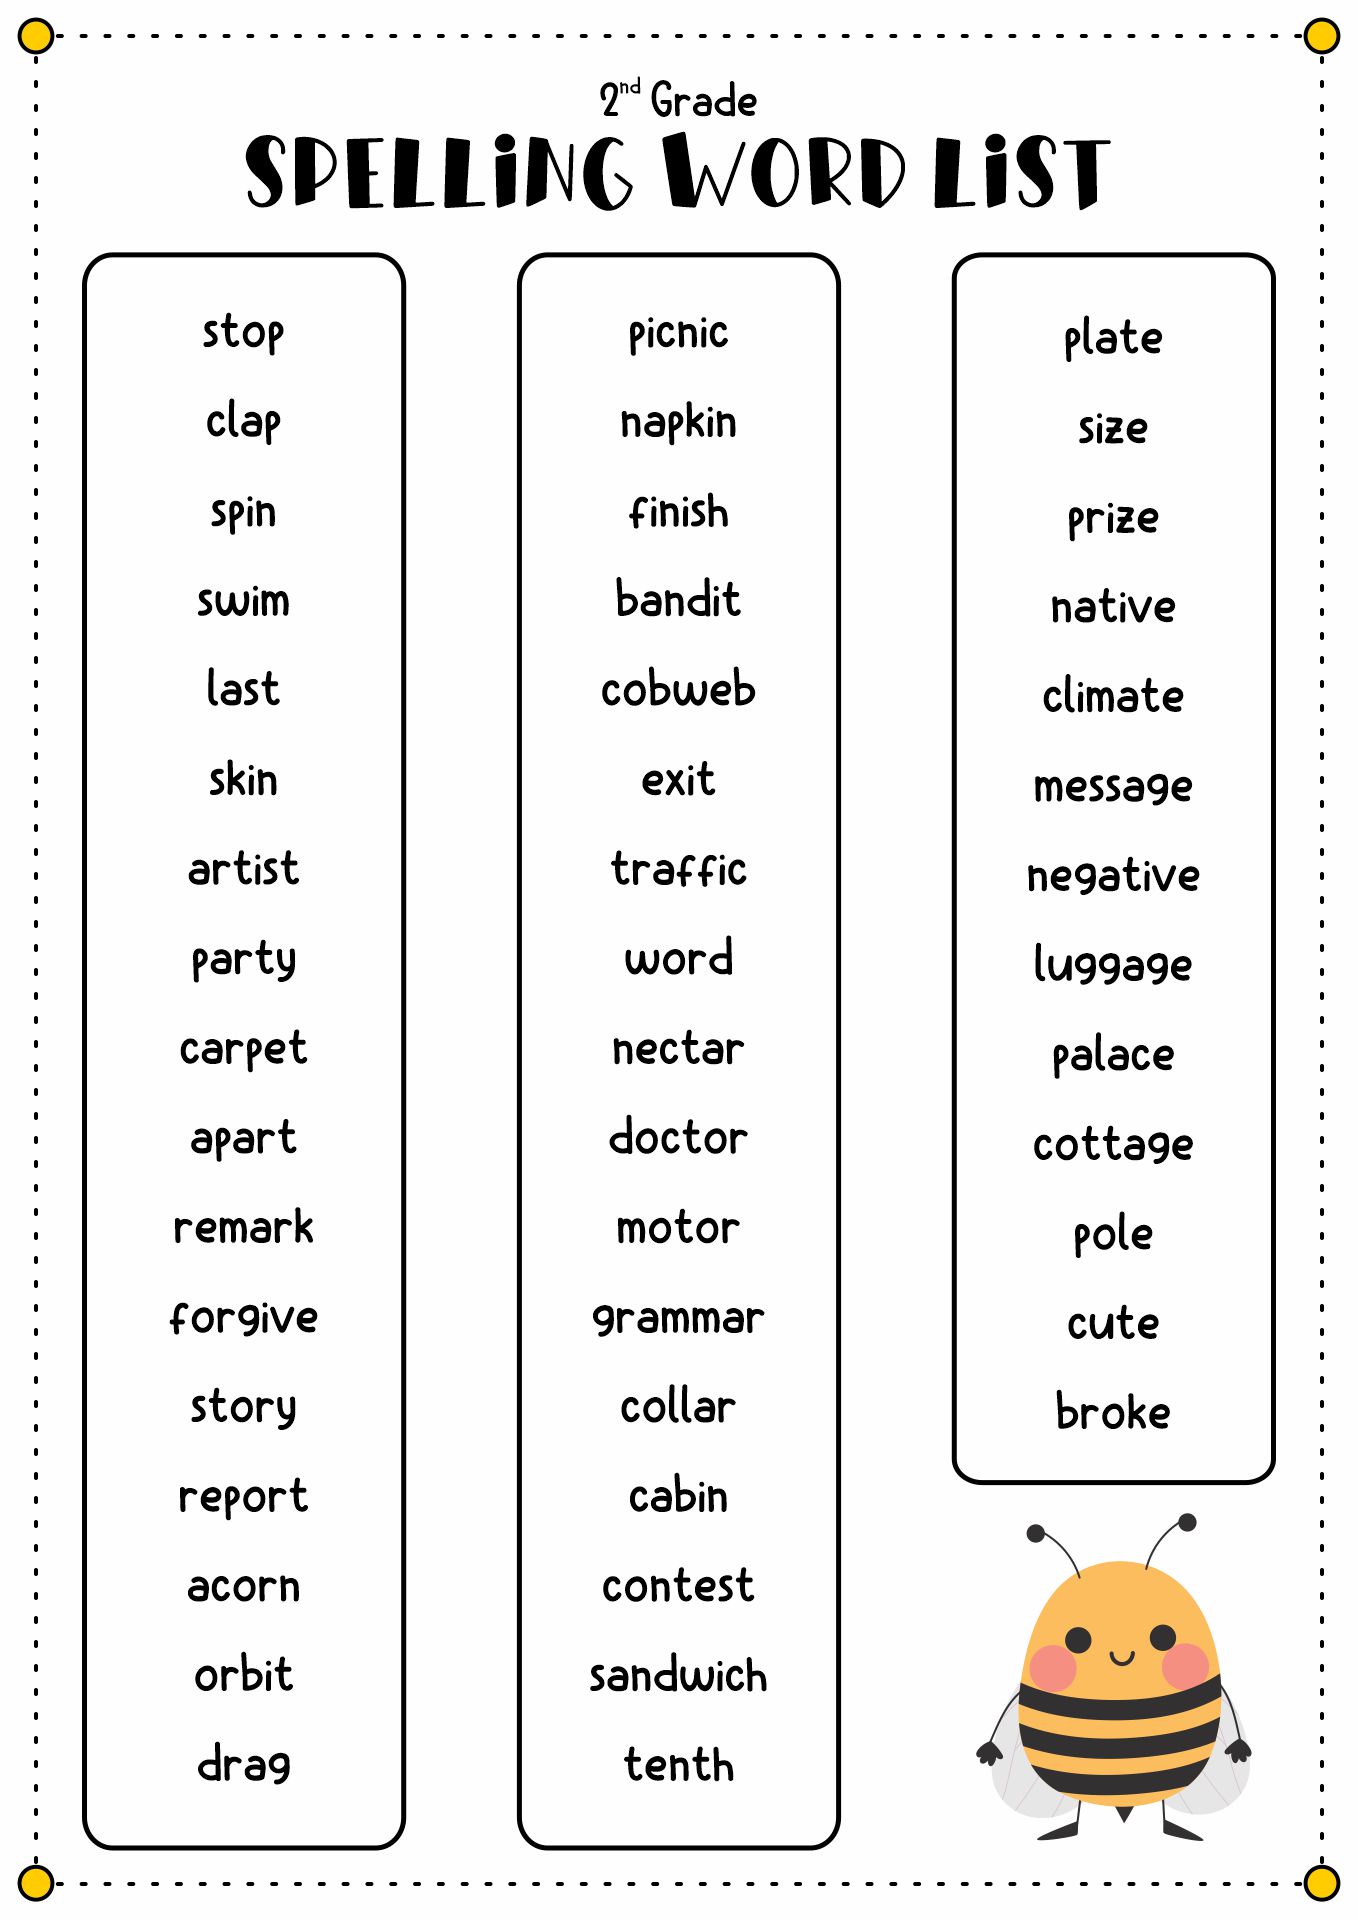 15 Best Images of Spelling Words Worksheets Grade 2 2 Grade Spelling